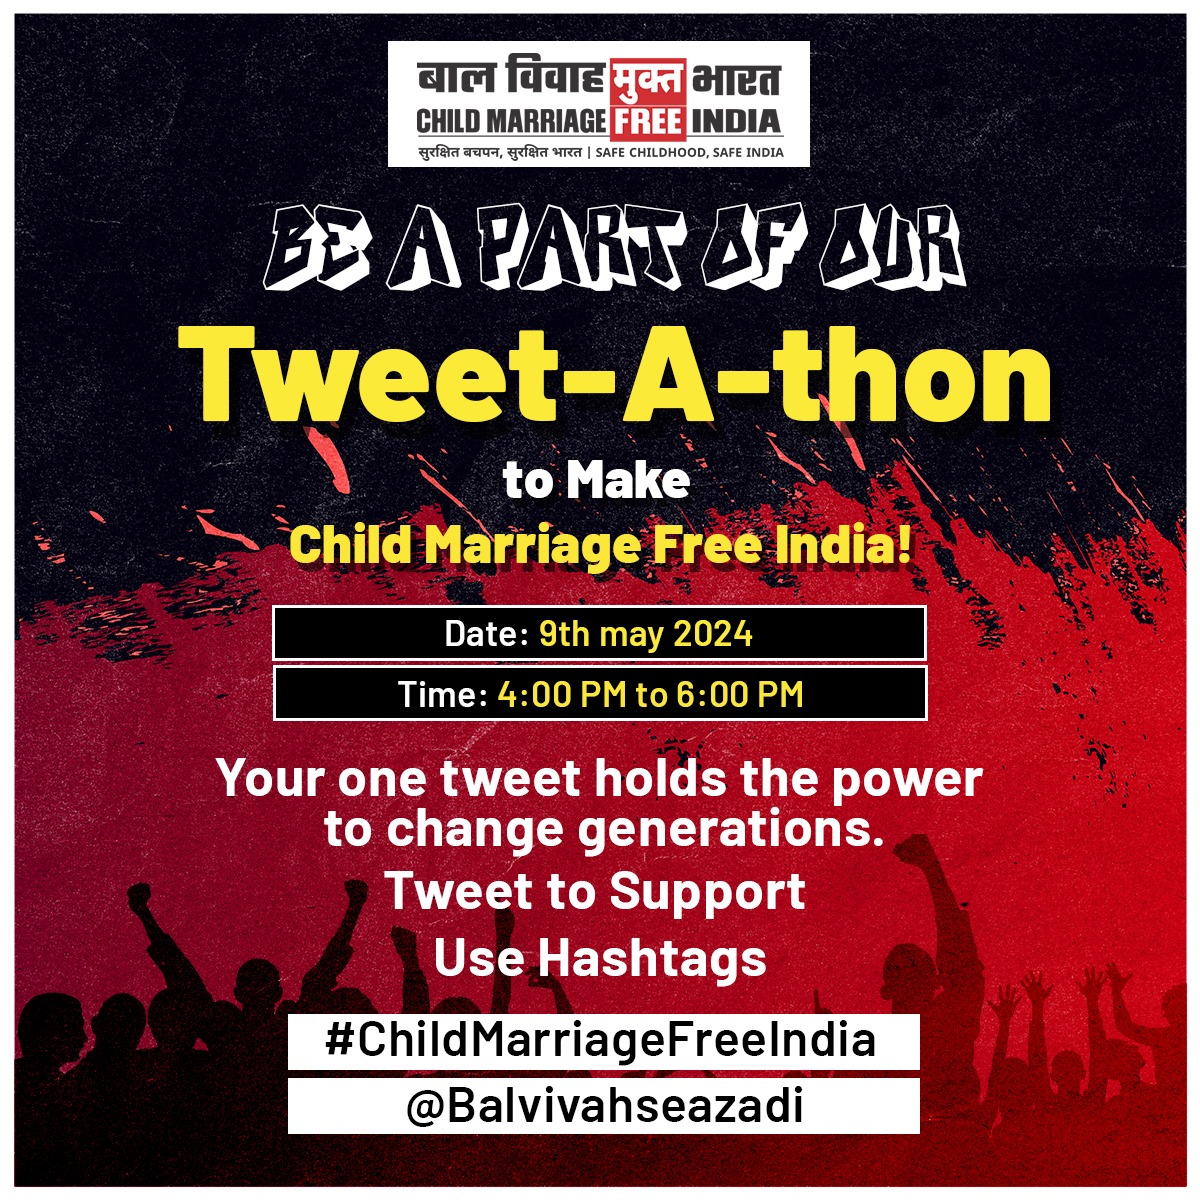 #ChildMarriageFreeIndia
#Balvivahseazadi